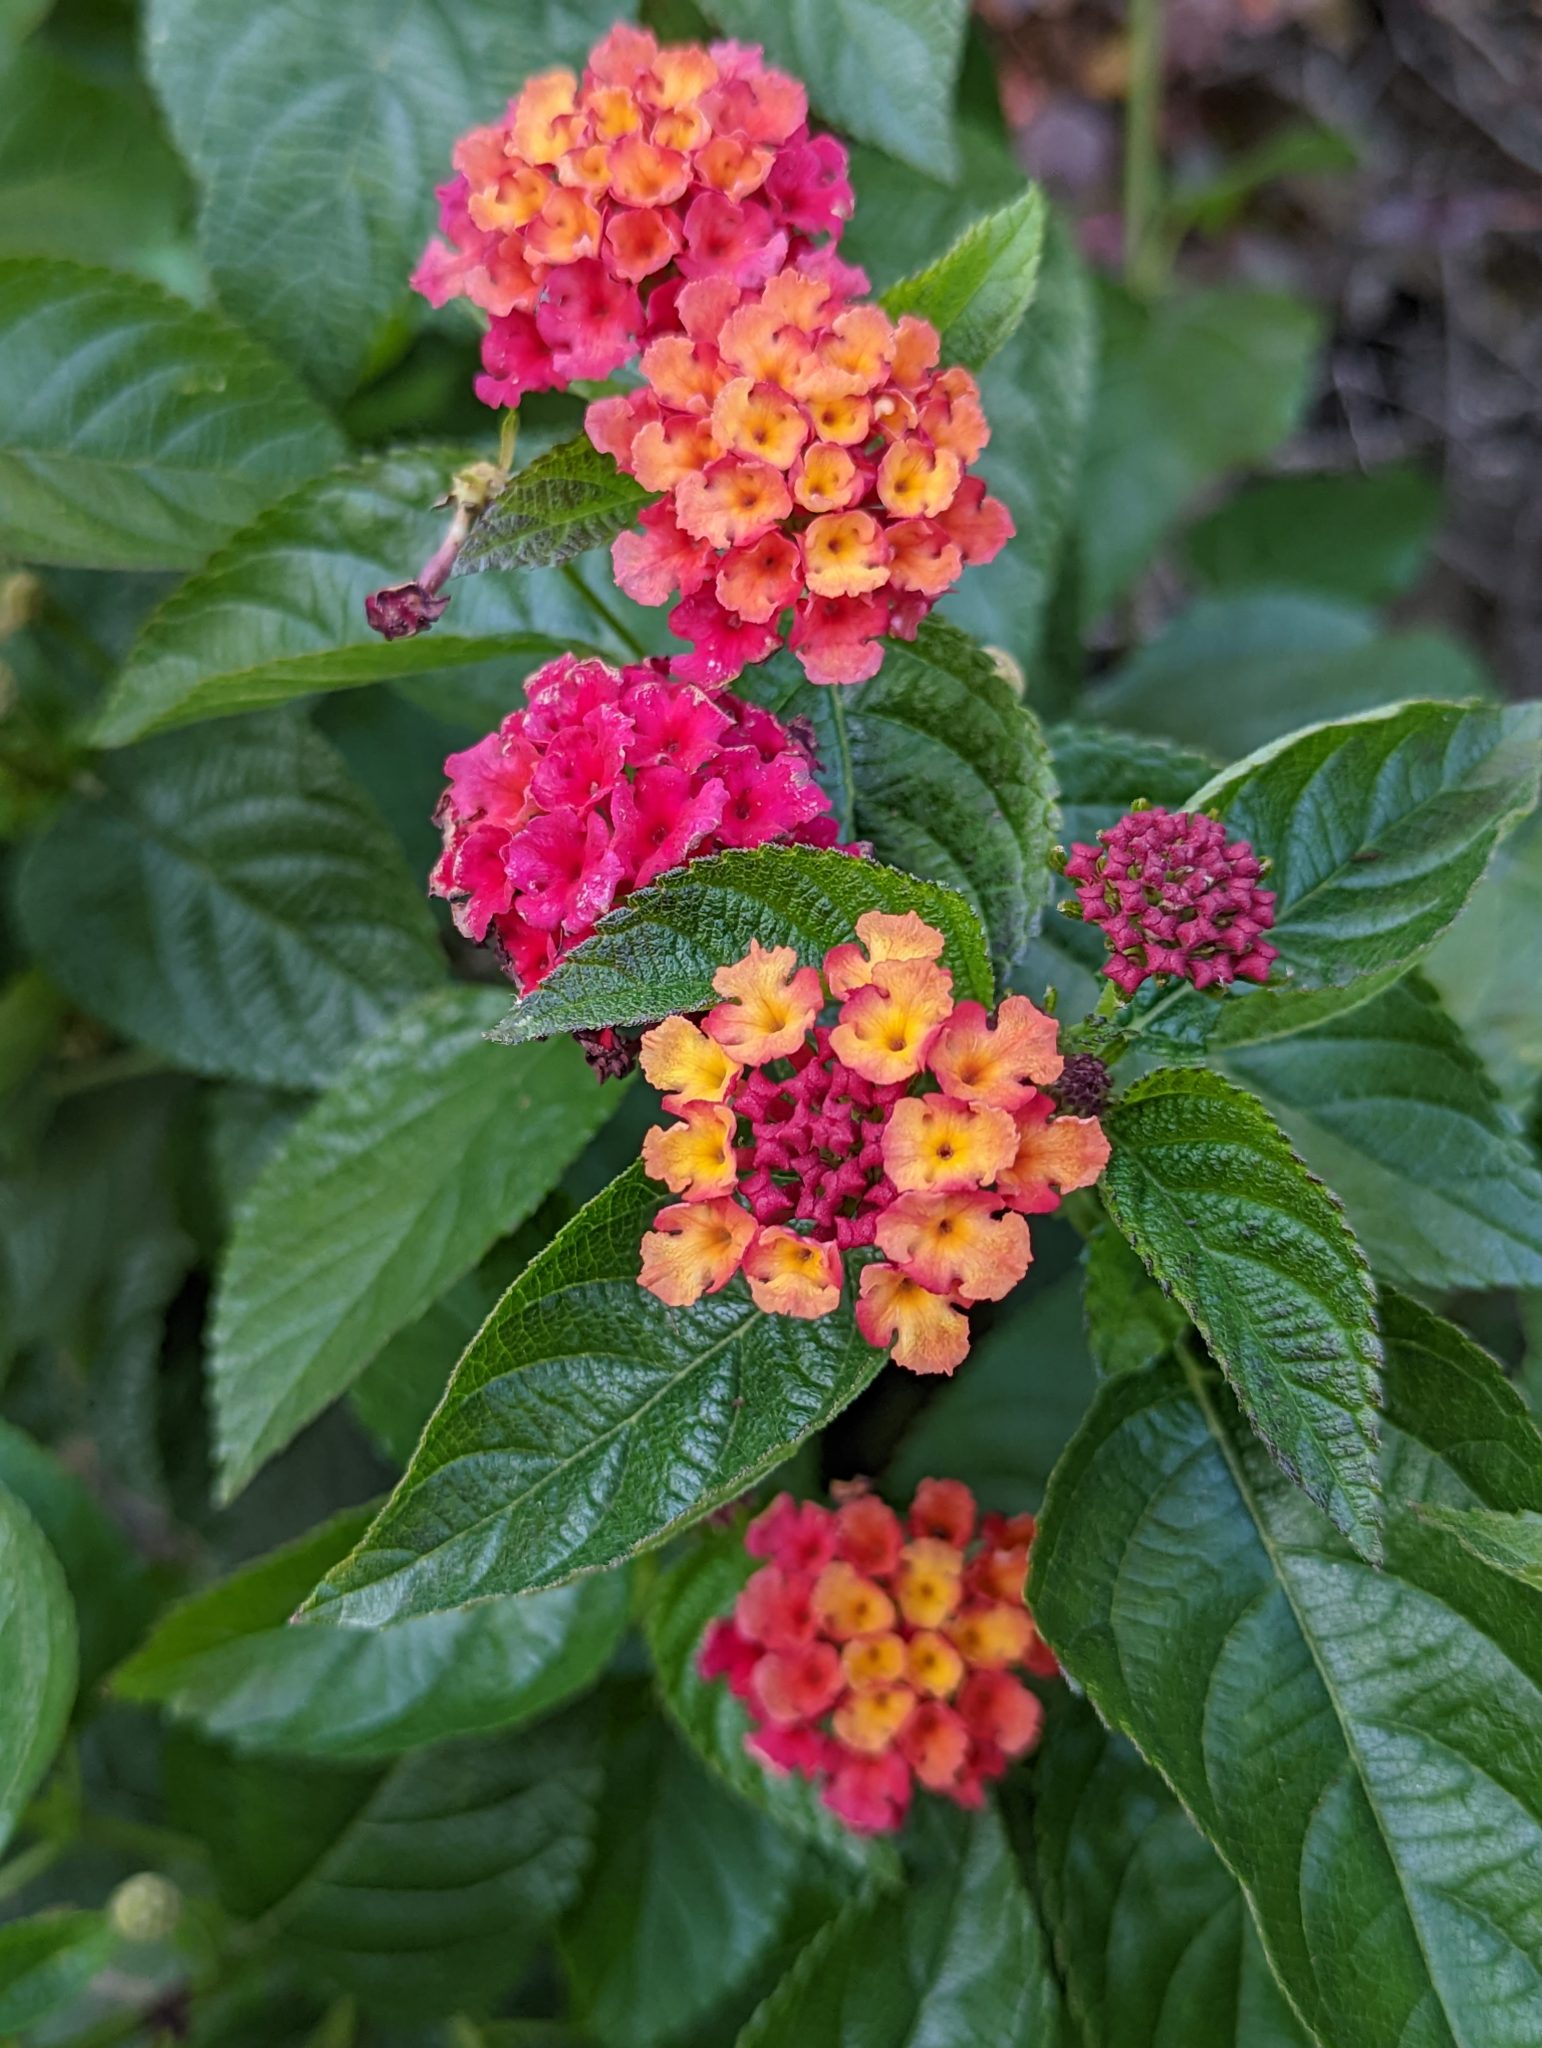 Multi-colored, fractal-looking flowers